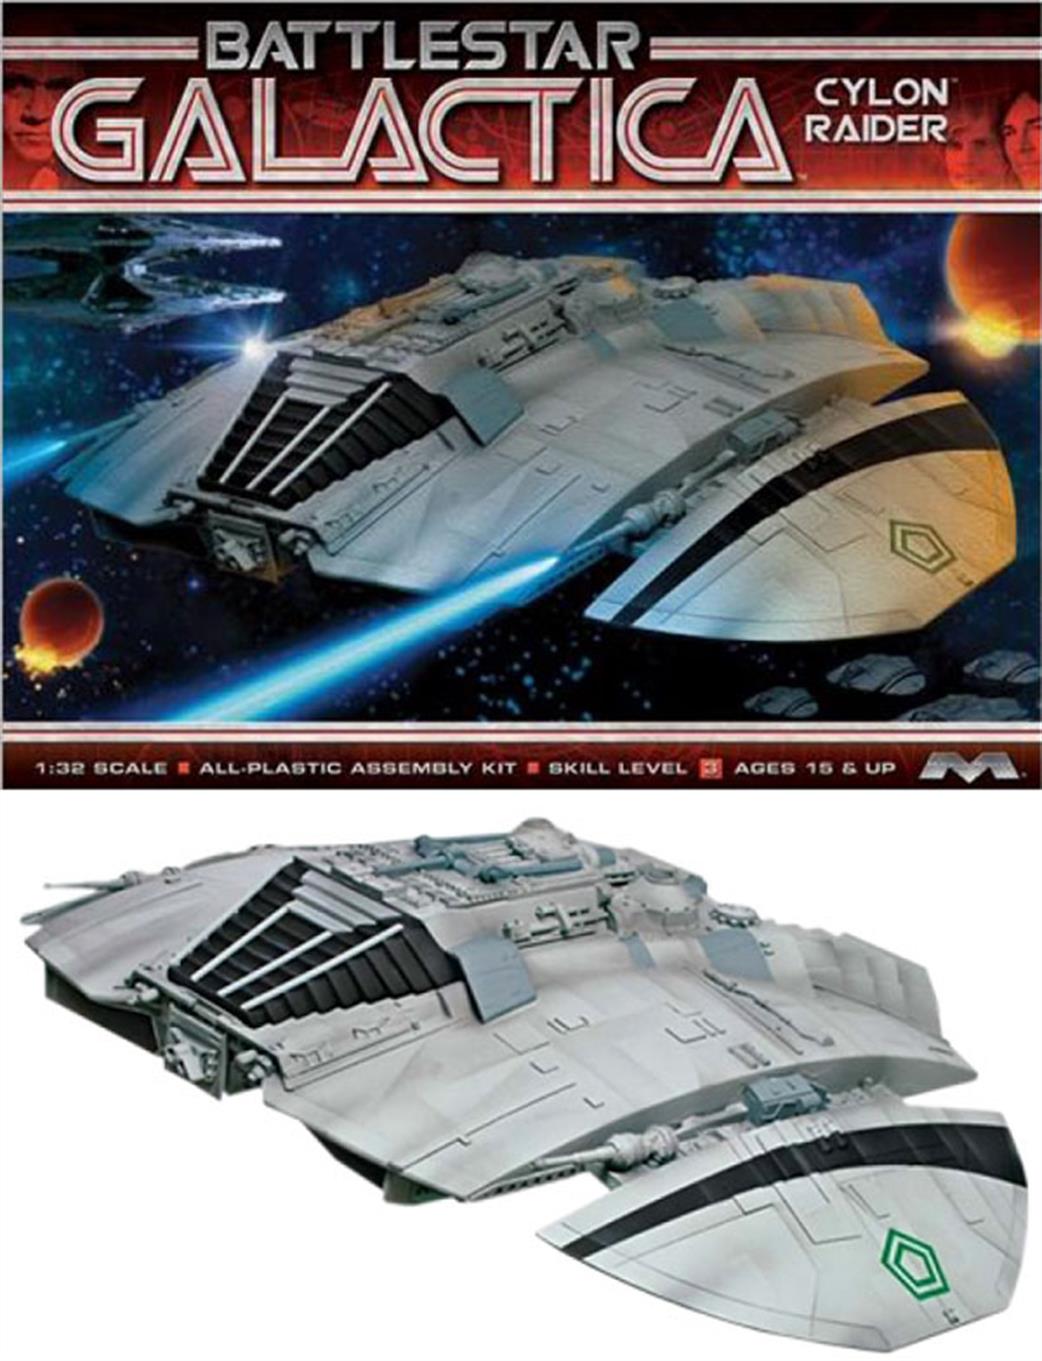 Moebius MMK941 Cylon Raider Battlestar Galactica Classic Series 1 Kit 1/32